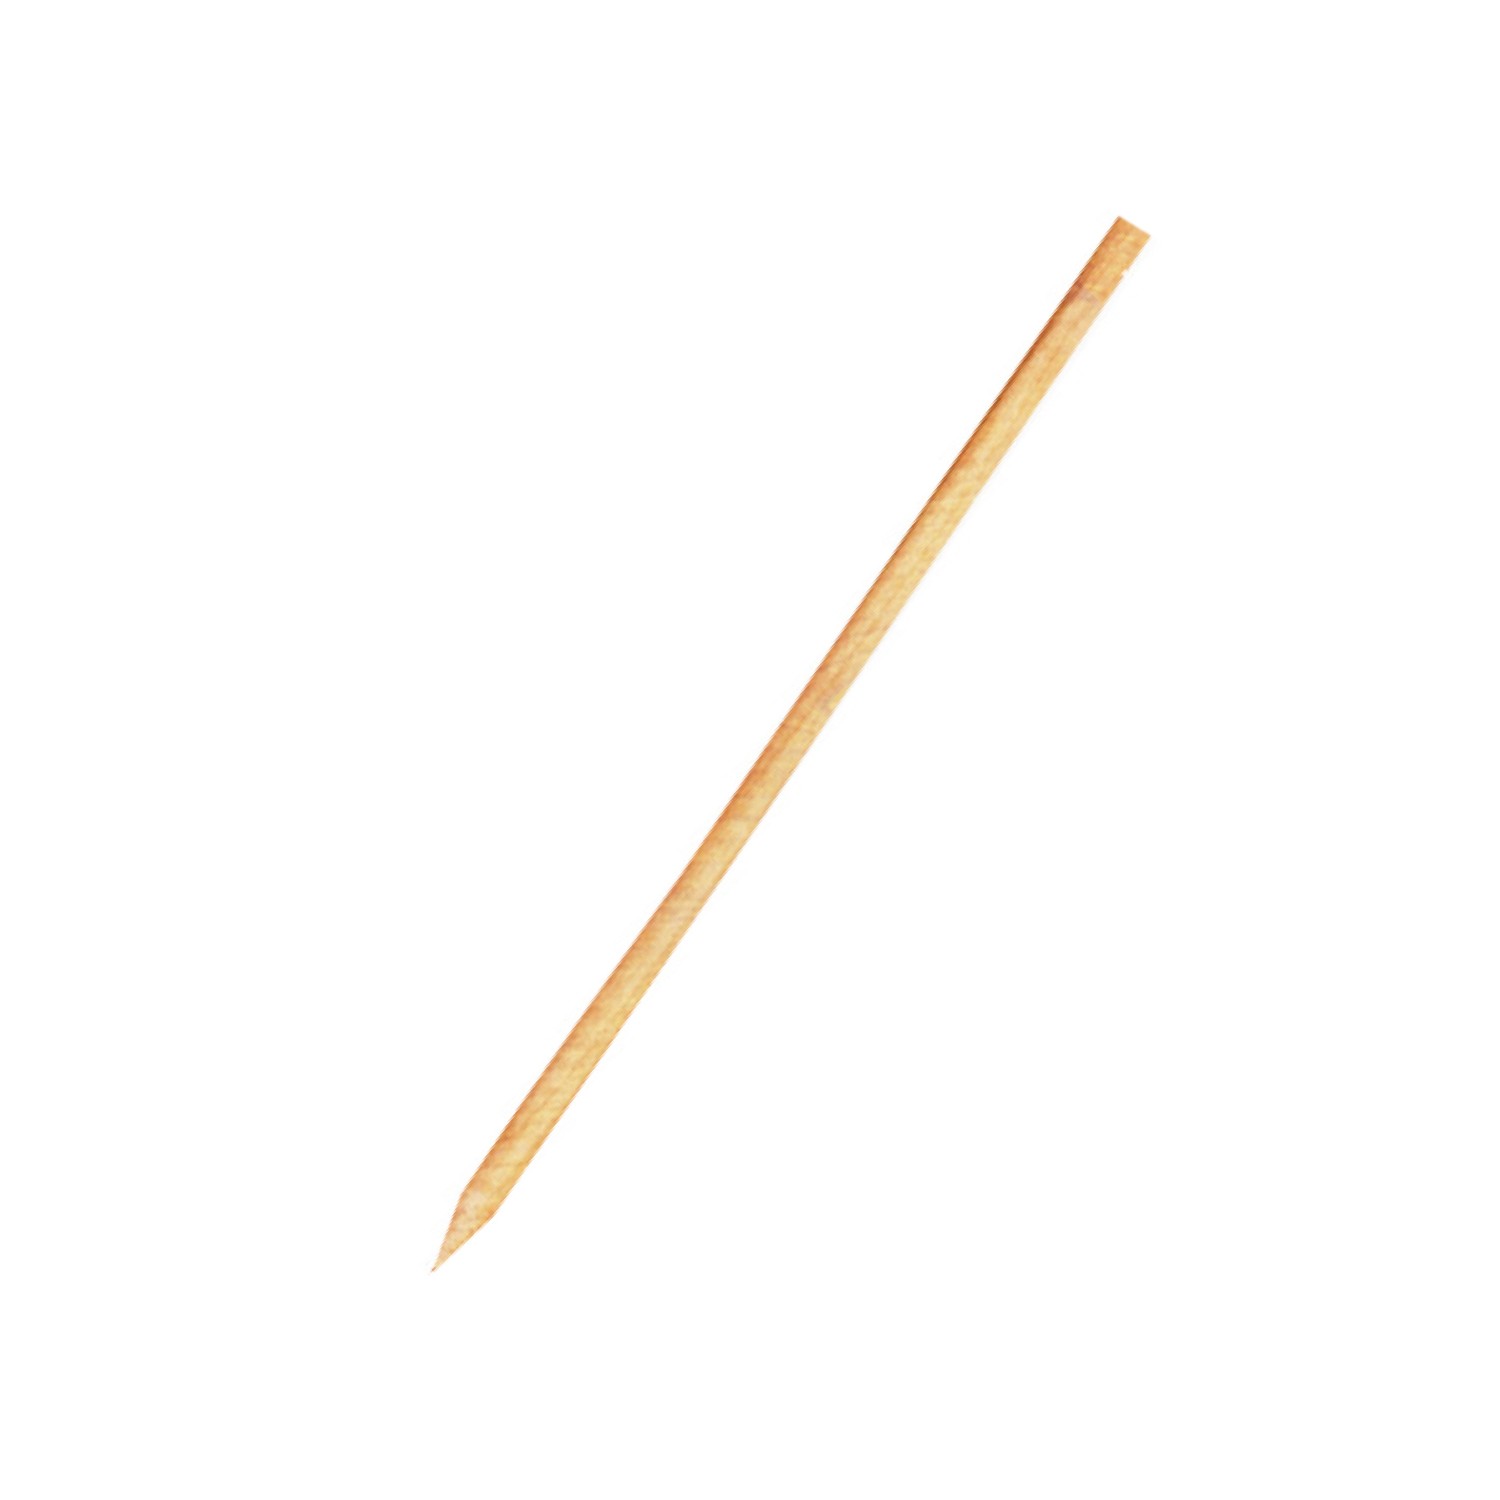 Bambusové špajdle ostré 25 cm, Ø 3 mm [200 ks]